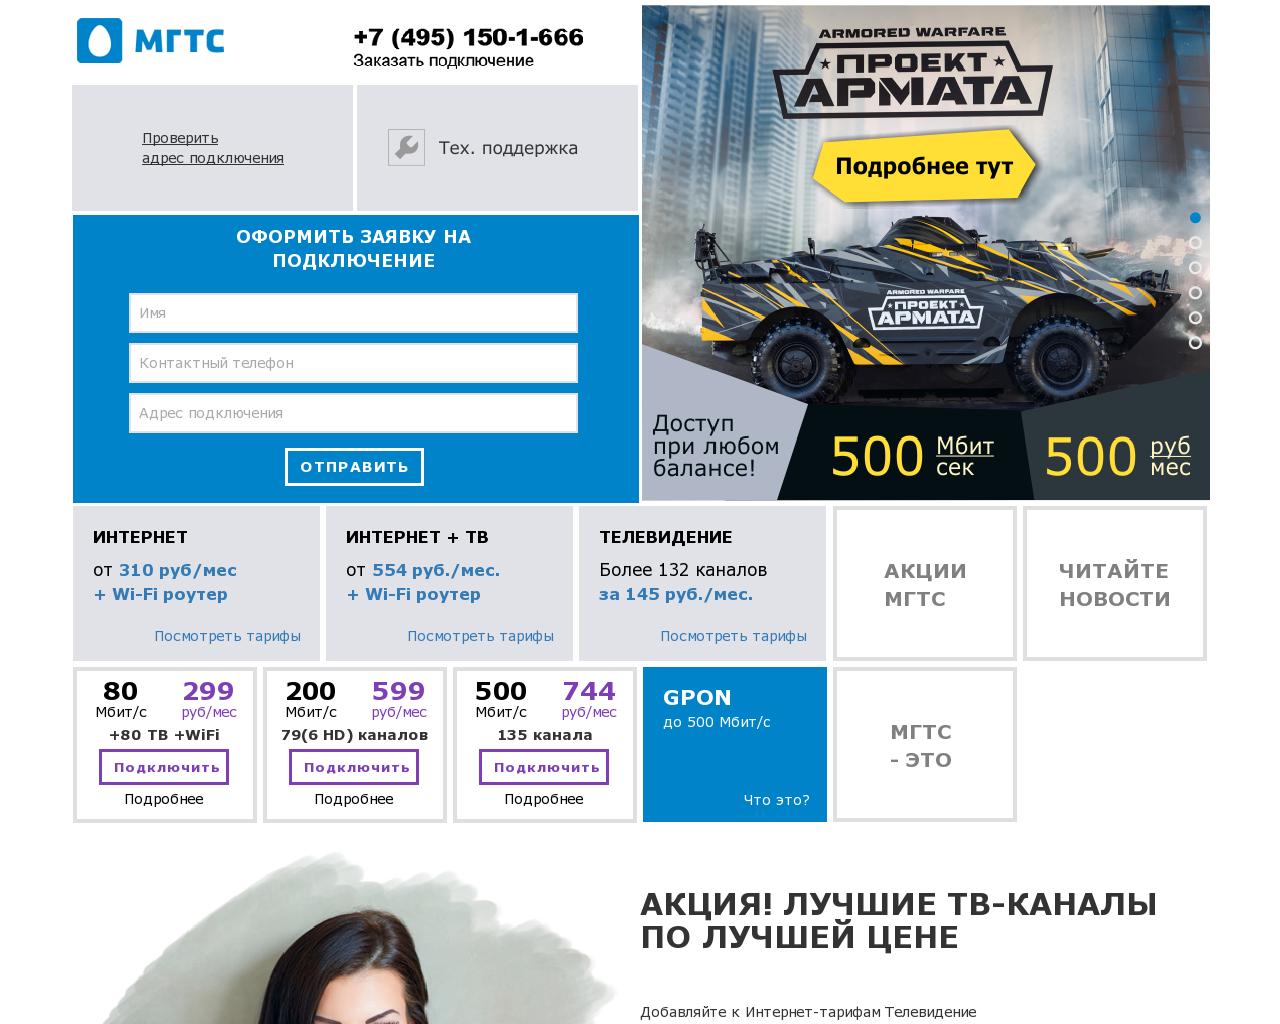 Изображение сайта moscow-mgts.ru в разрешении 1280x1024